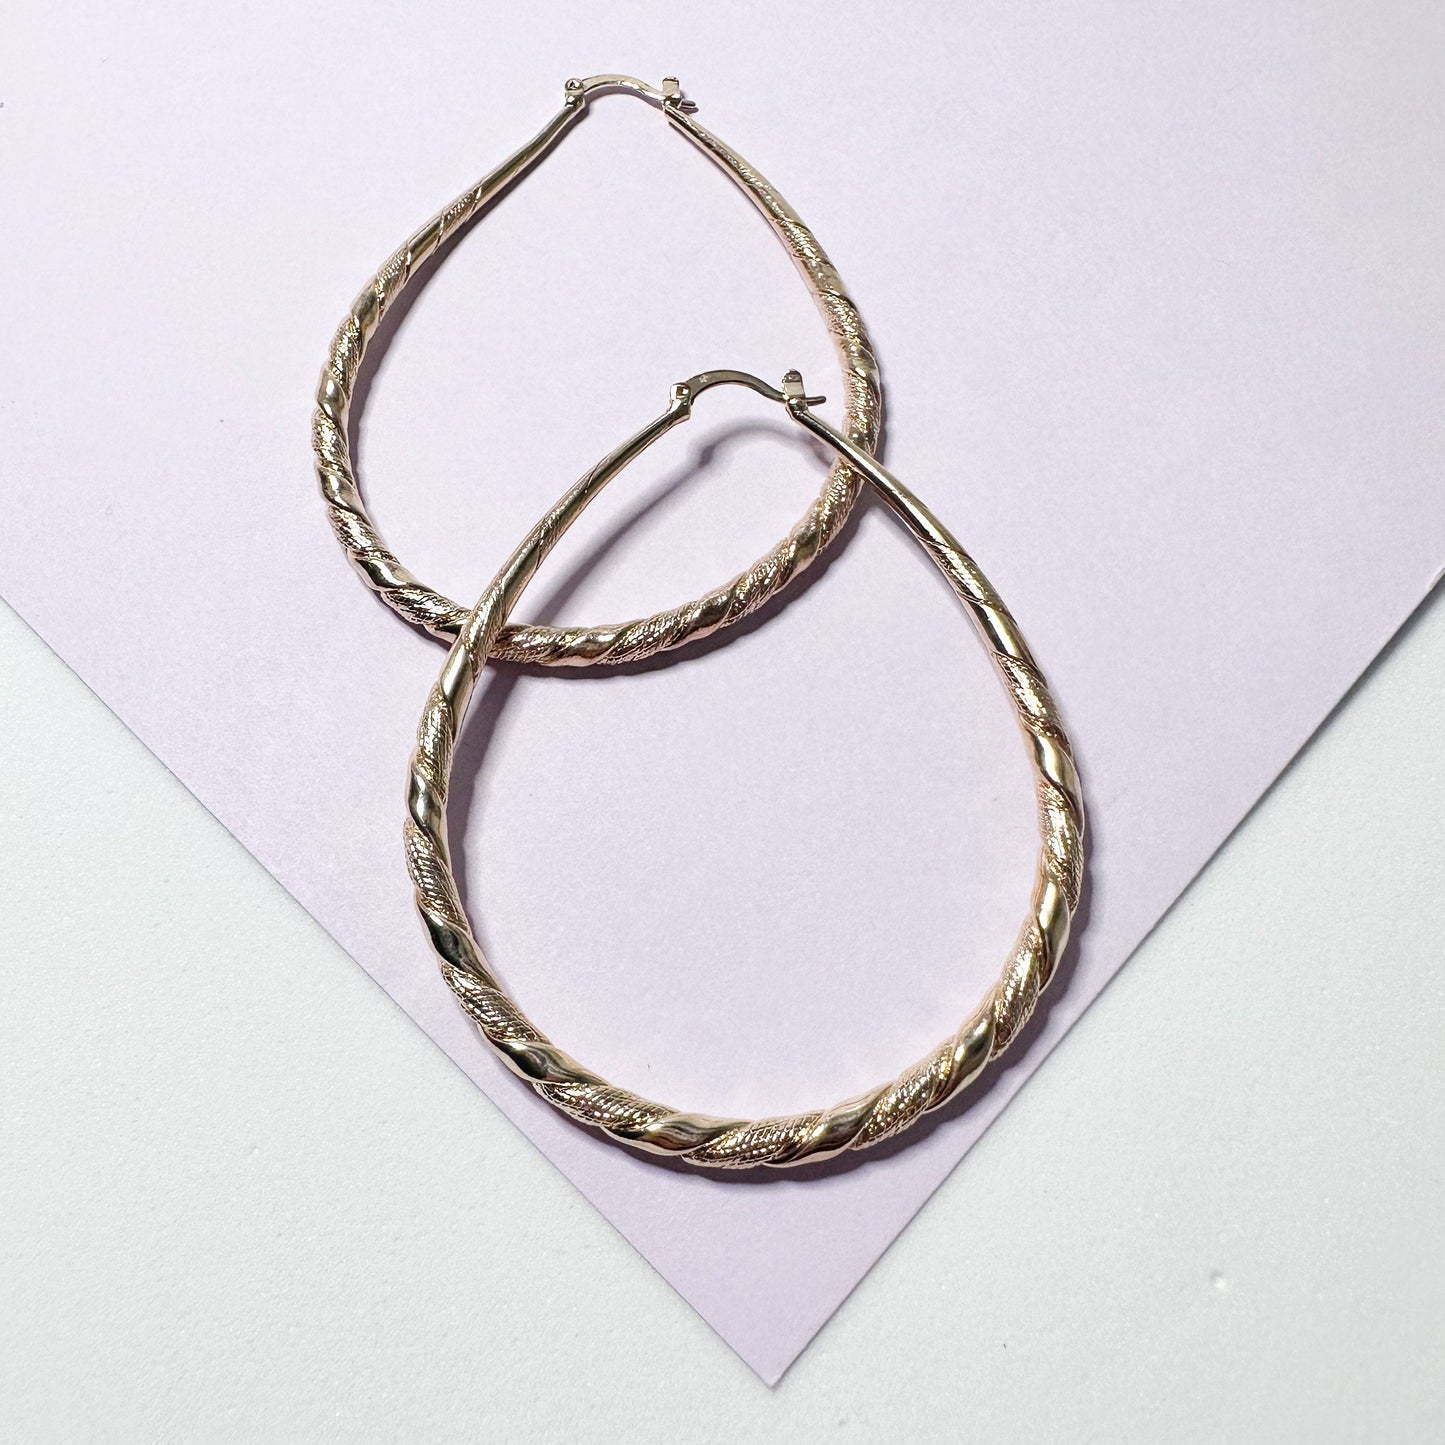 18k Gold Filled Tear Drop Shaped Hoop Earrings With Engraved Pattern